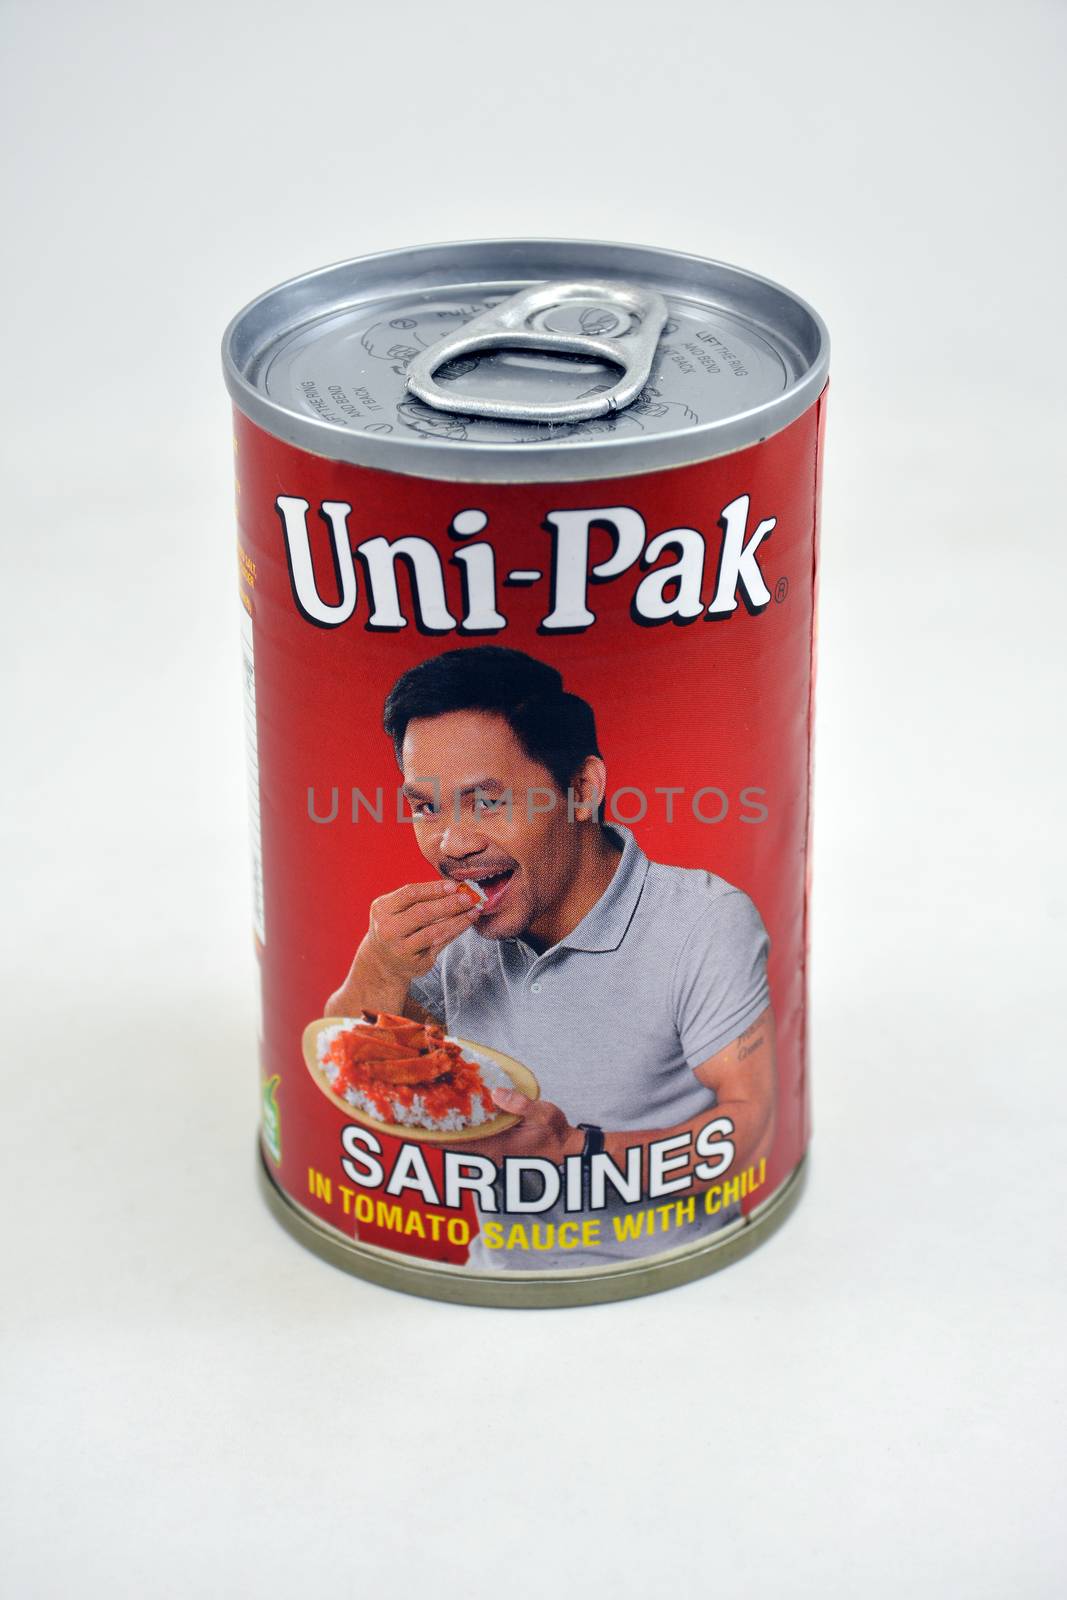 Unipak sardines in Manila, Philippines by imwaltersy